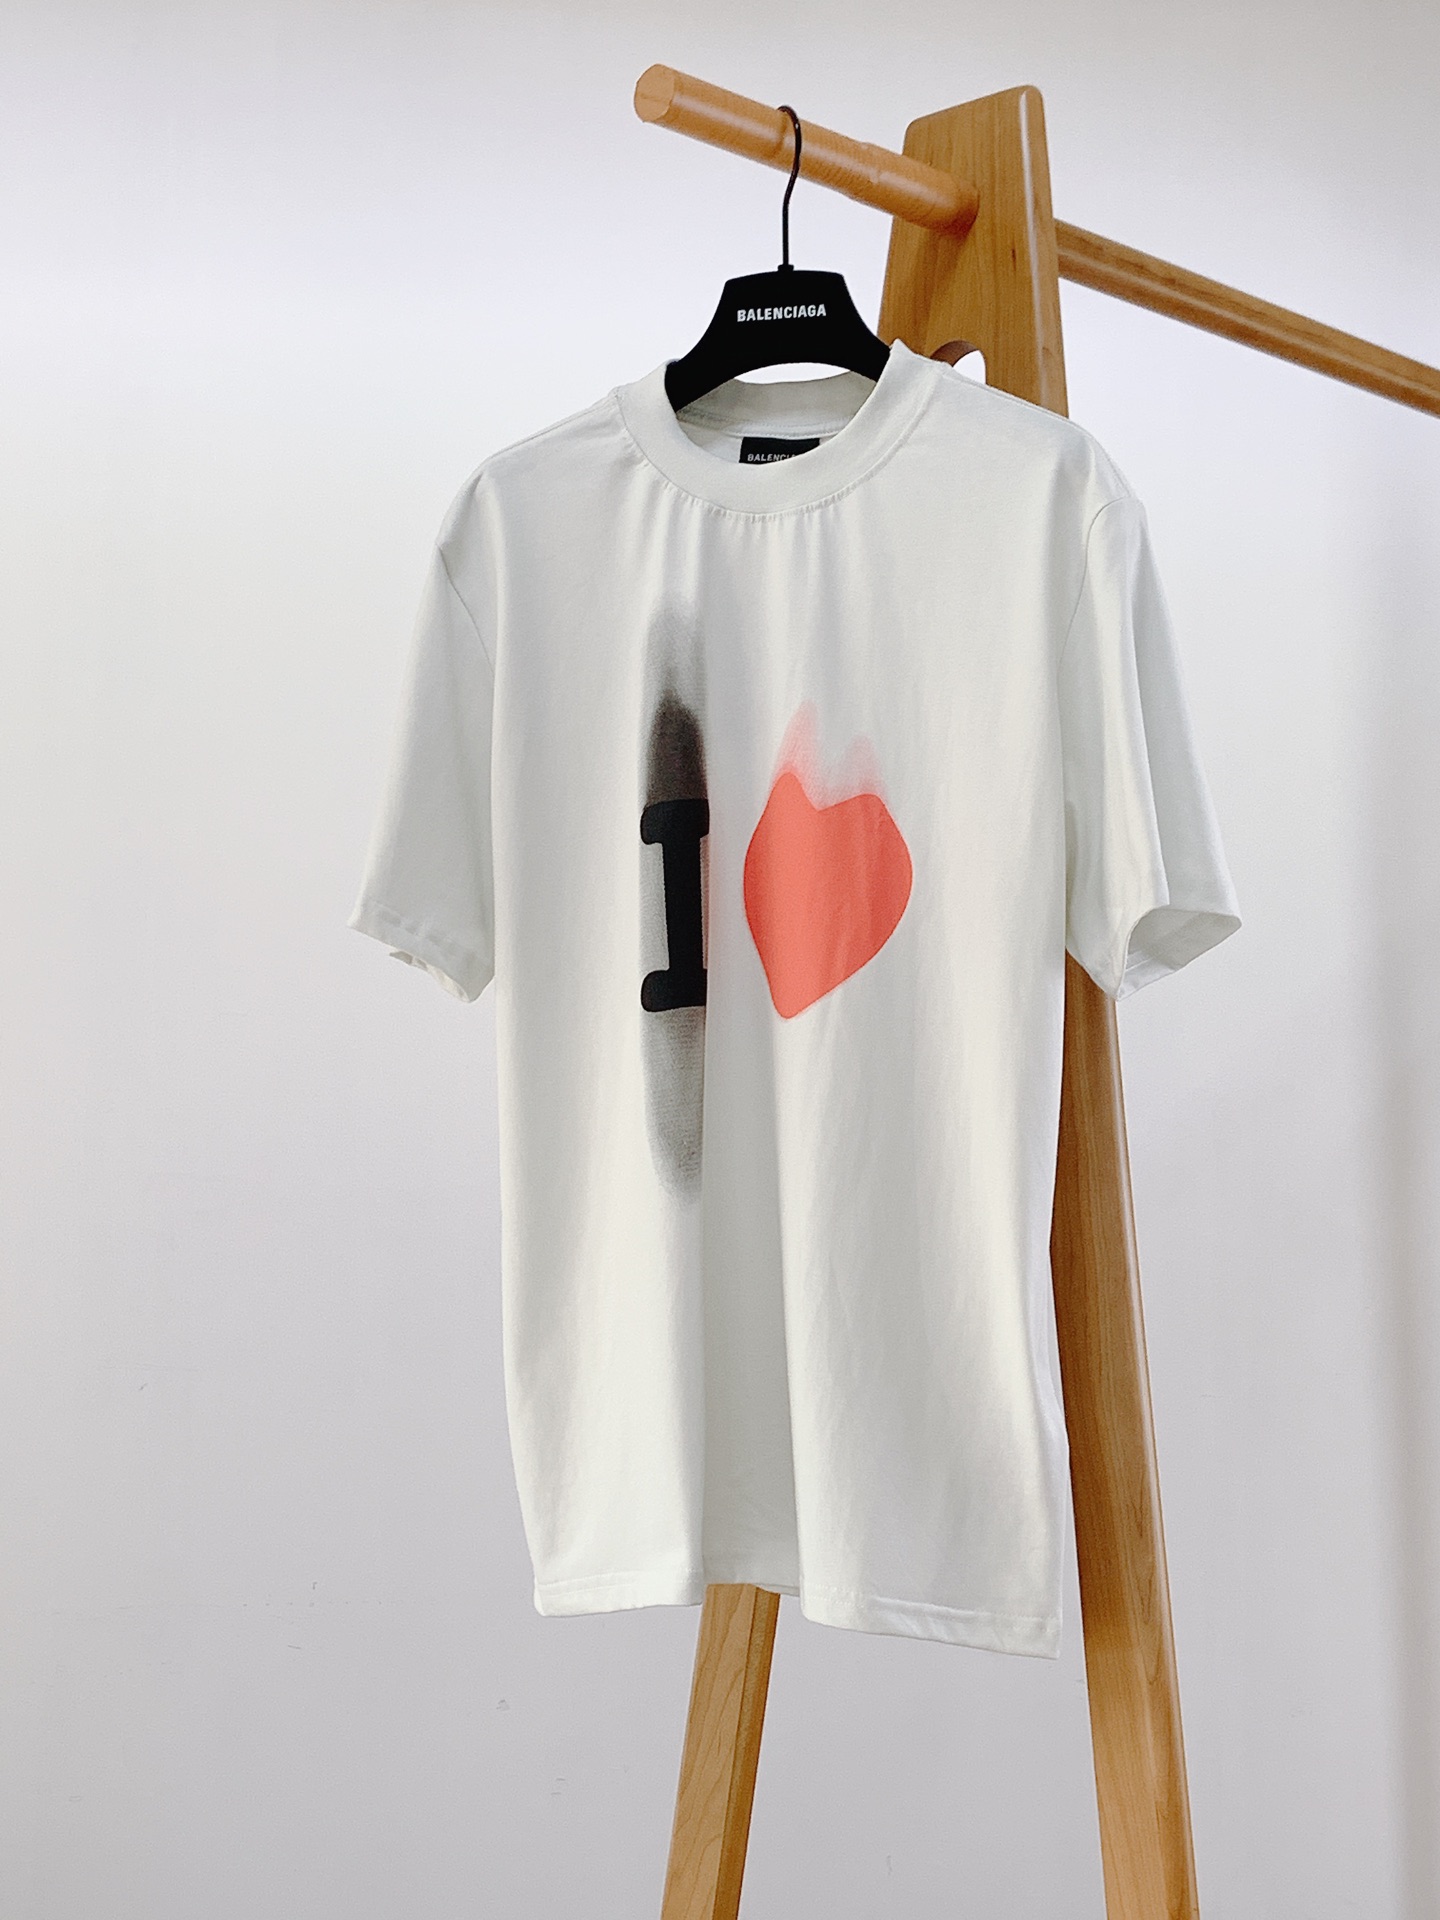 Balenciaga Clothing T-Shirt Printing Cotton Knitting Spring/Summer Collection Short Sleeve